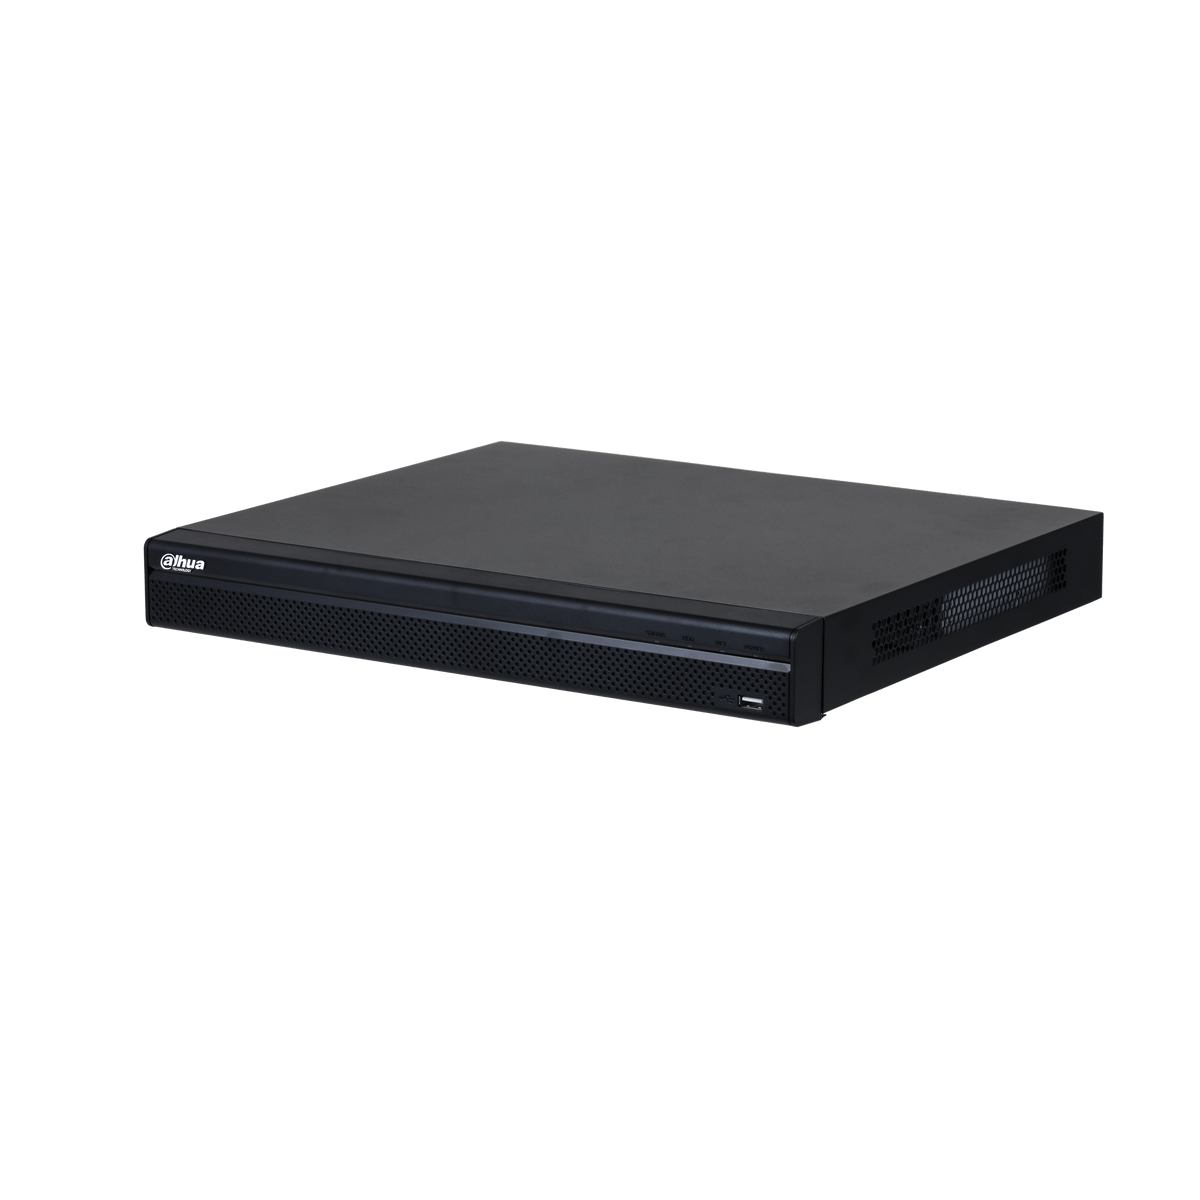 DAHUA NVR4208-4KS2/L 8 Channel 1U 2HDDs Network Video Recorder